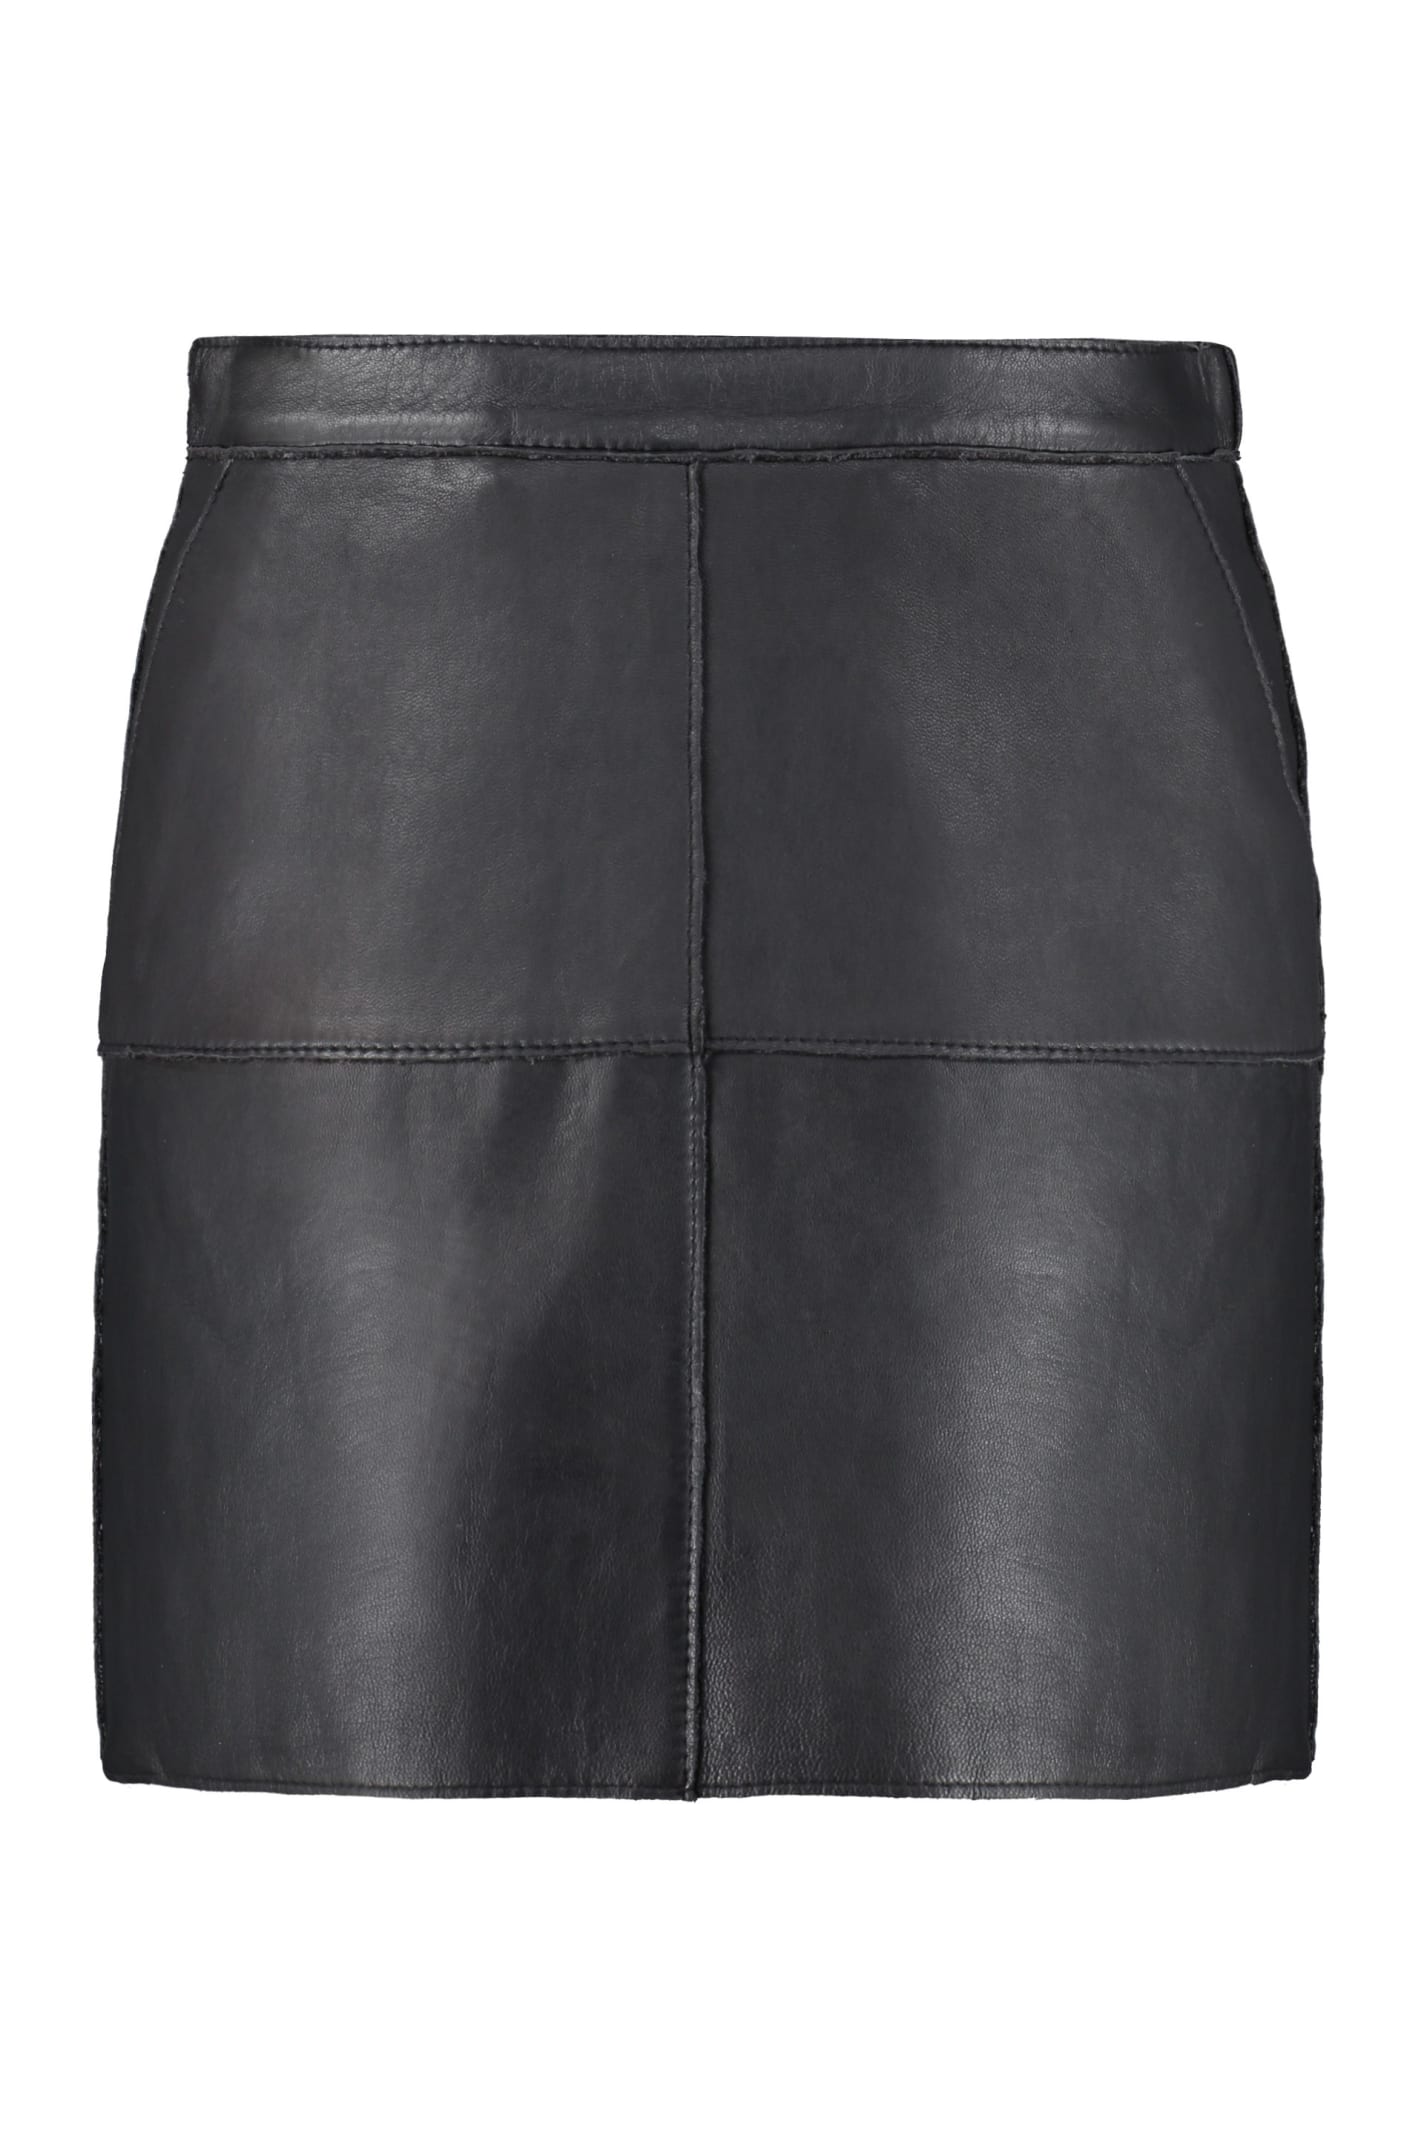 Parosh Maciockx Leather Mini Skirt